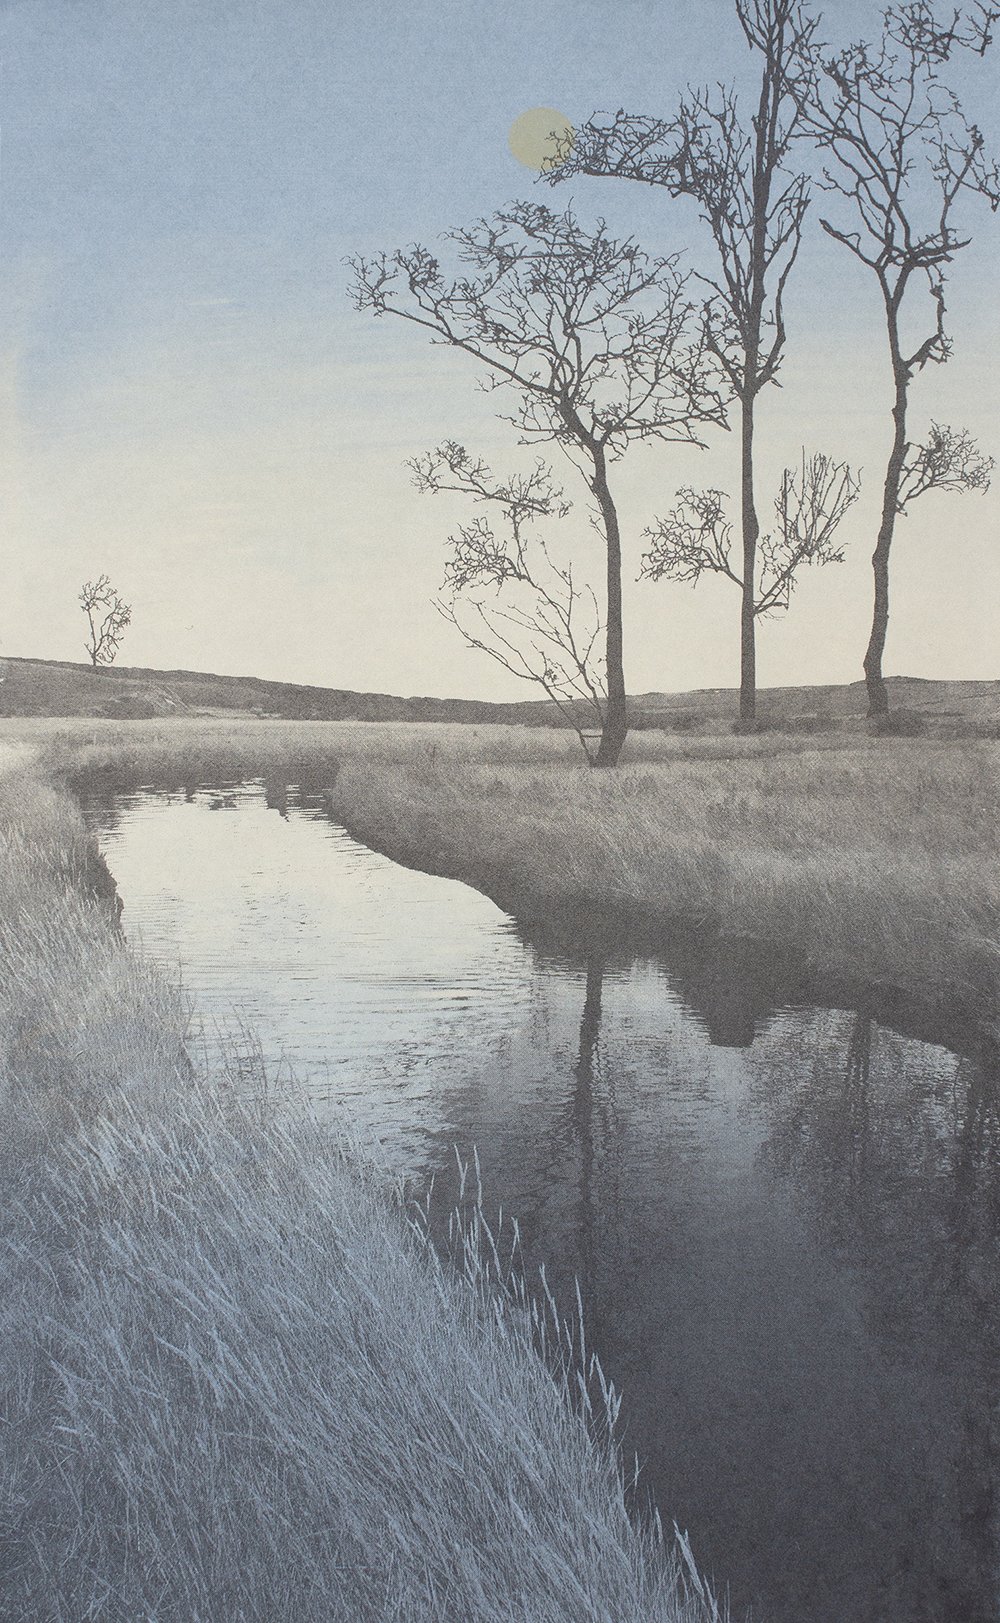 Sherrie-Leigh-Jones-River-by-Moonlight-Landscape-after Koho-Shoda.jpg